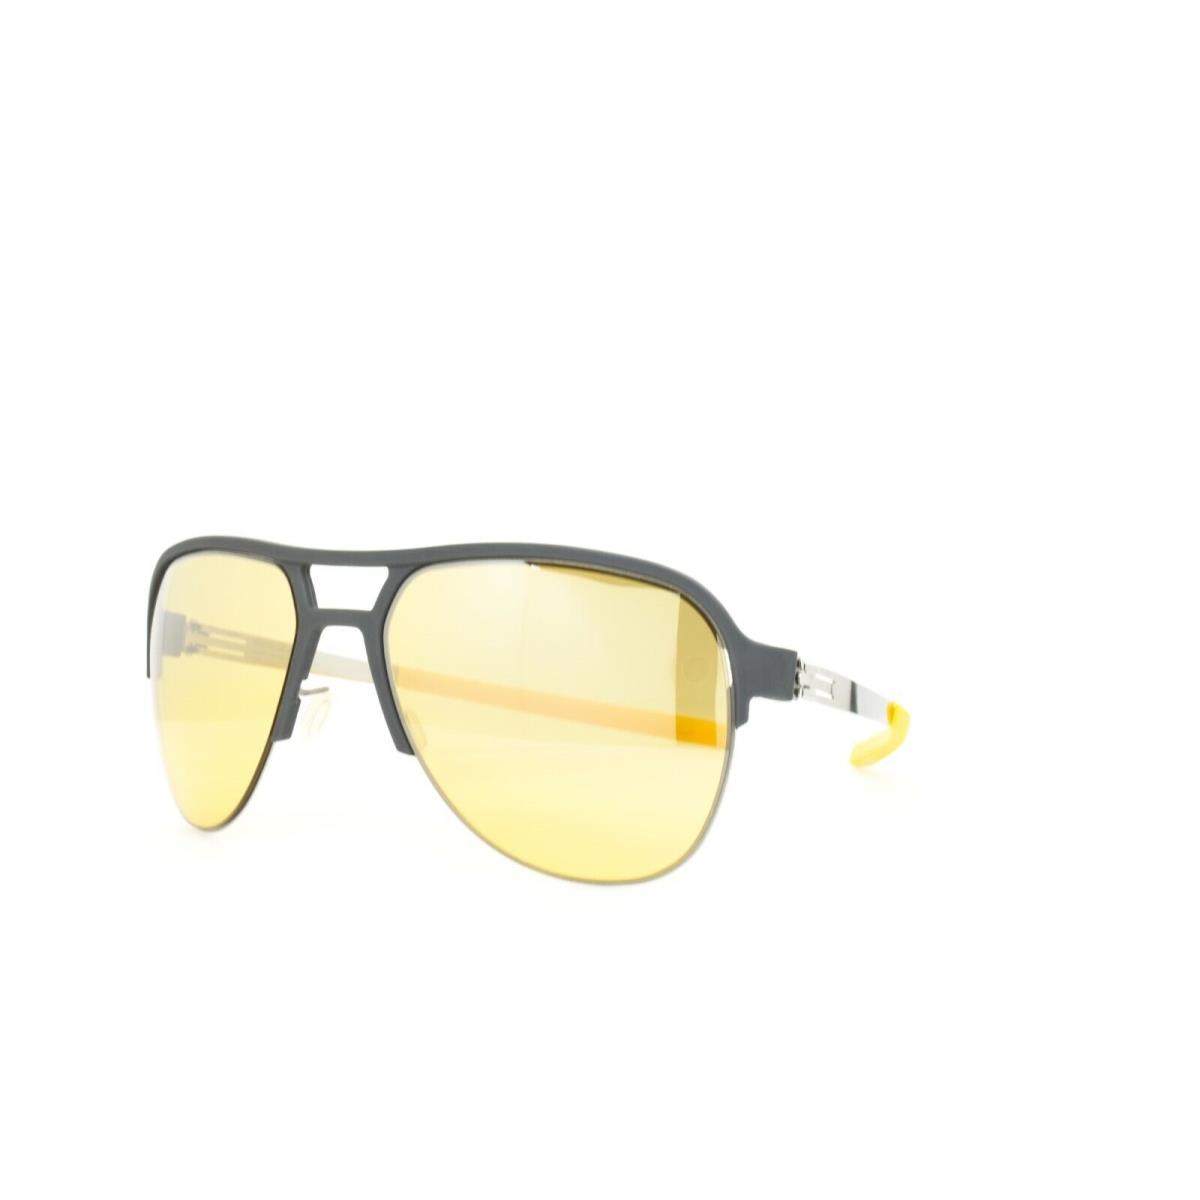 iC Berlin Sunglasses Pulse Grey Chrome Yellow 58-21-145